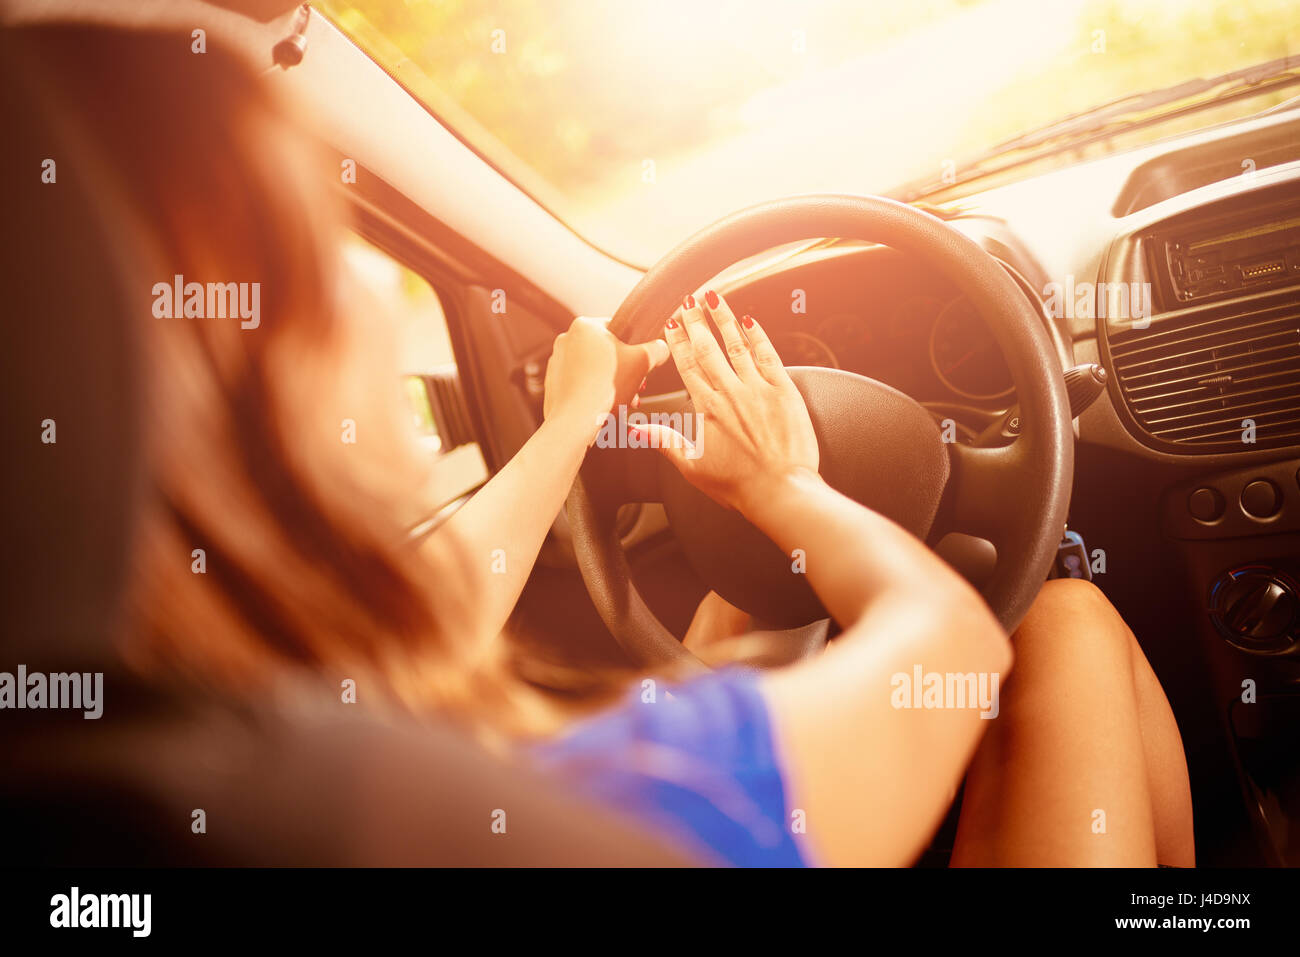 Autofahrerin Auto und Hupe drücken Stockfotografie - Alamy